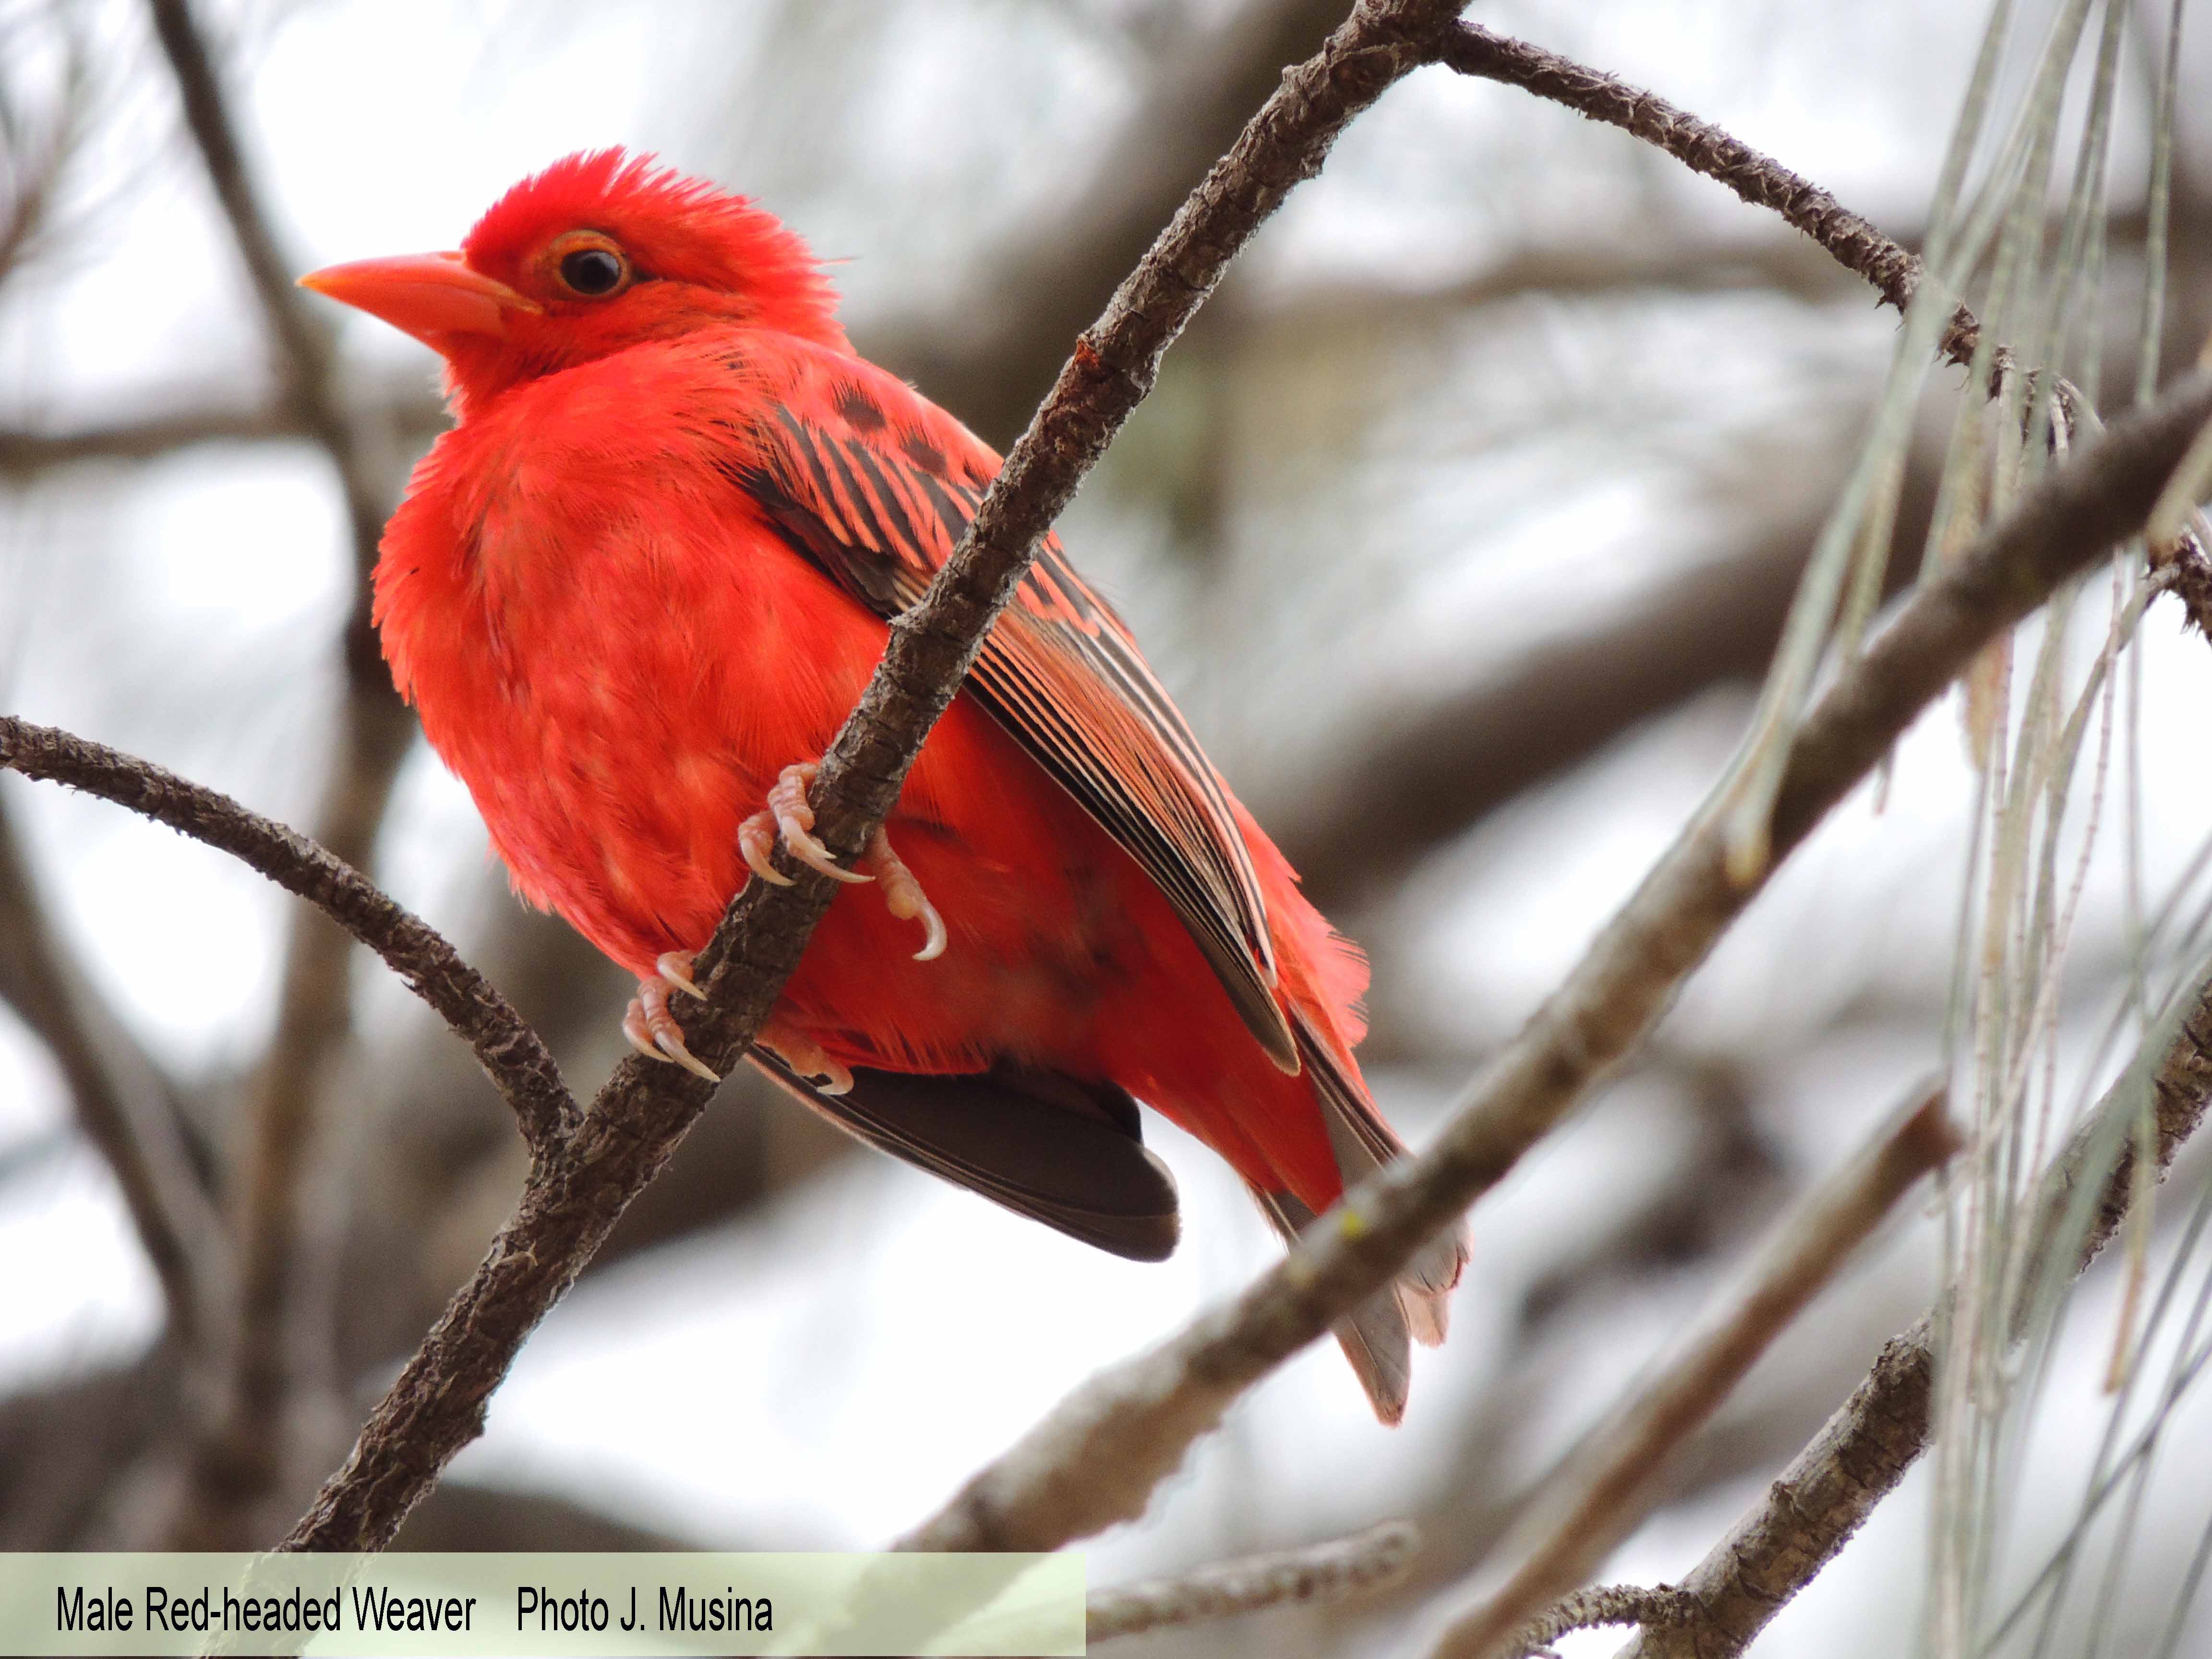 Pretty Red-headed weaver